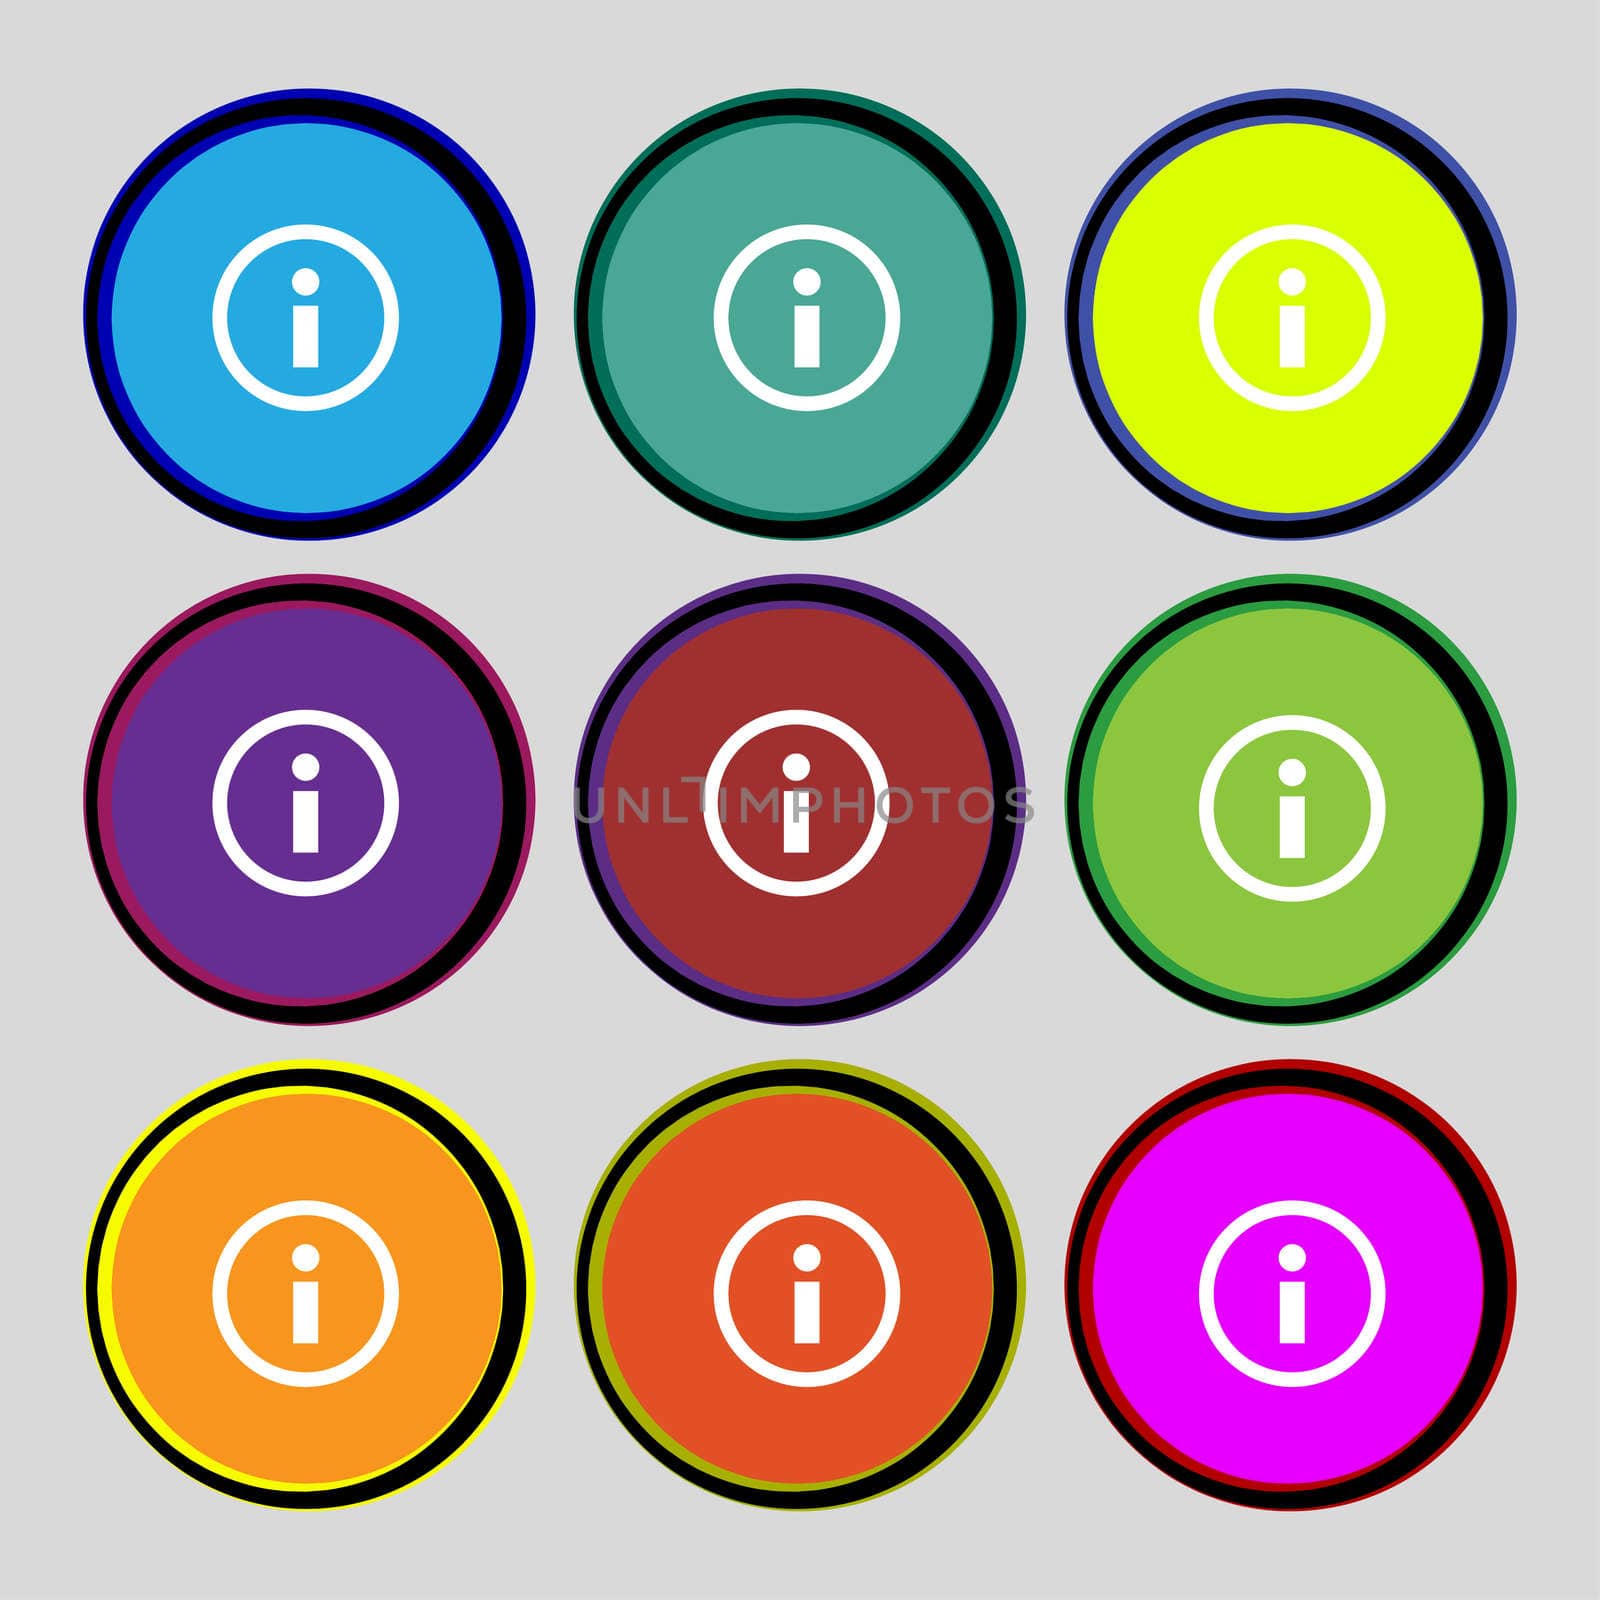 Information sign icon. Info speech bubble symbol. Set colour buttons. illustration